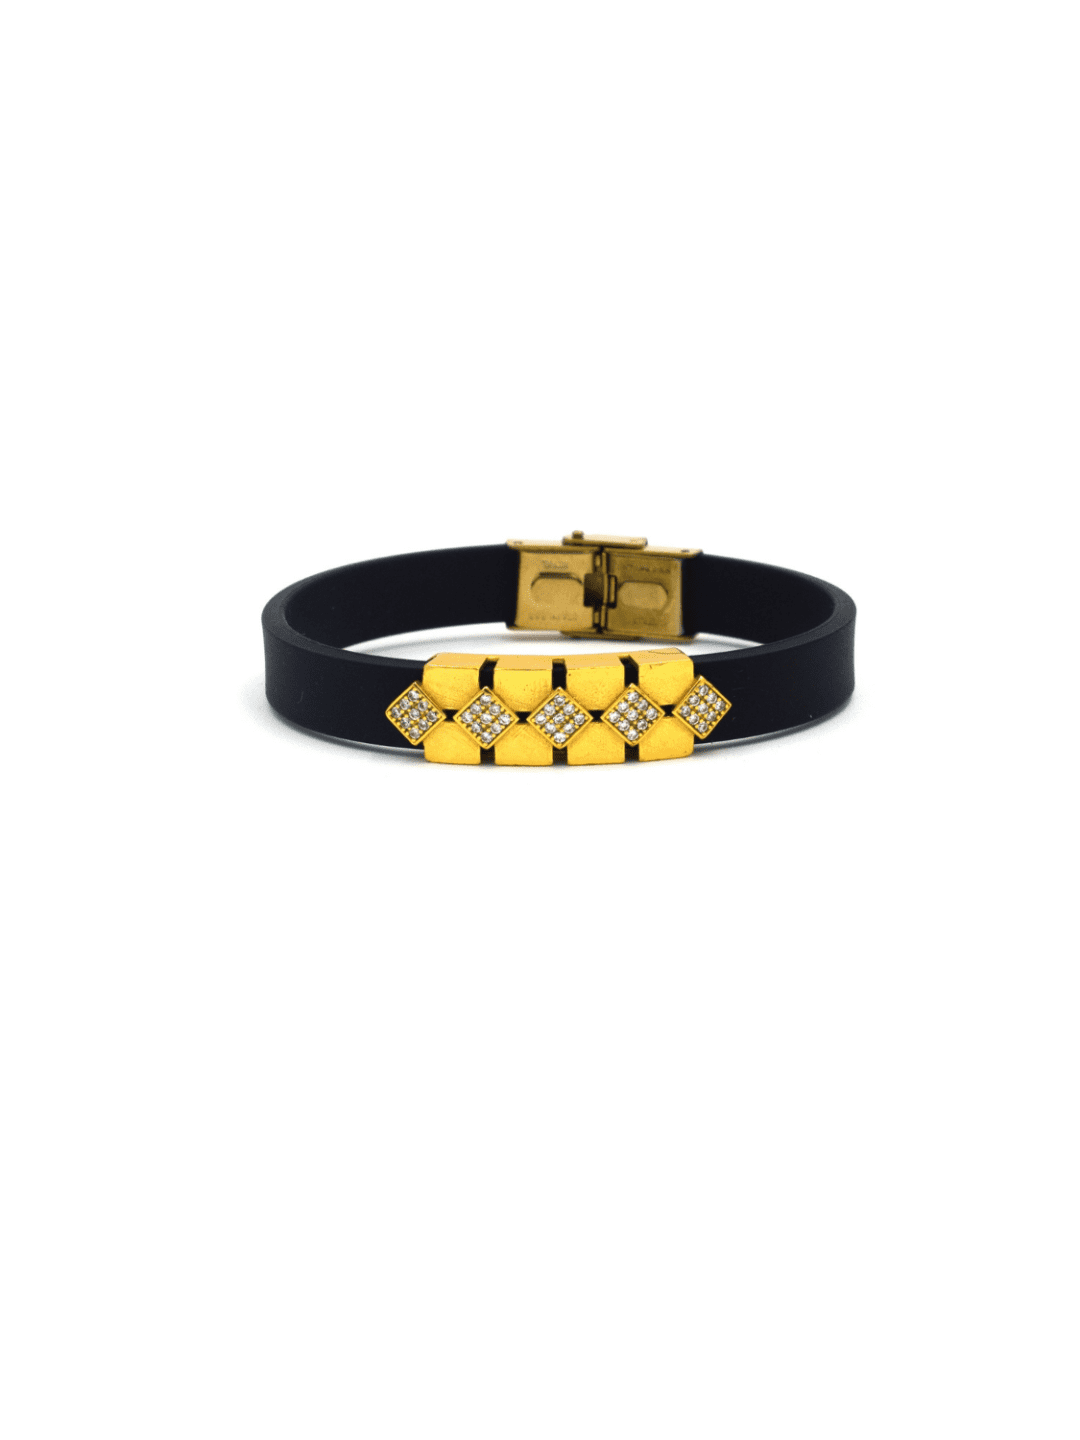 Buy Gold Aum Leather Bracelet for Men from Aumkaara at Jewelslane